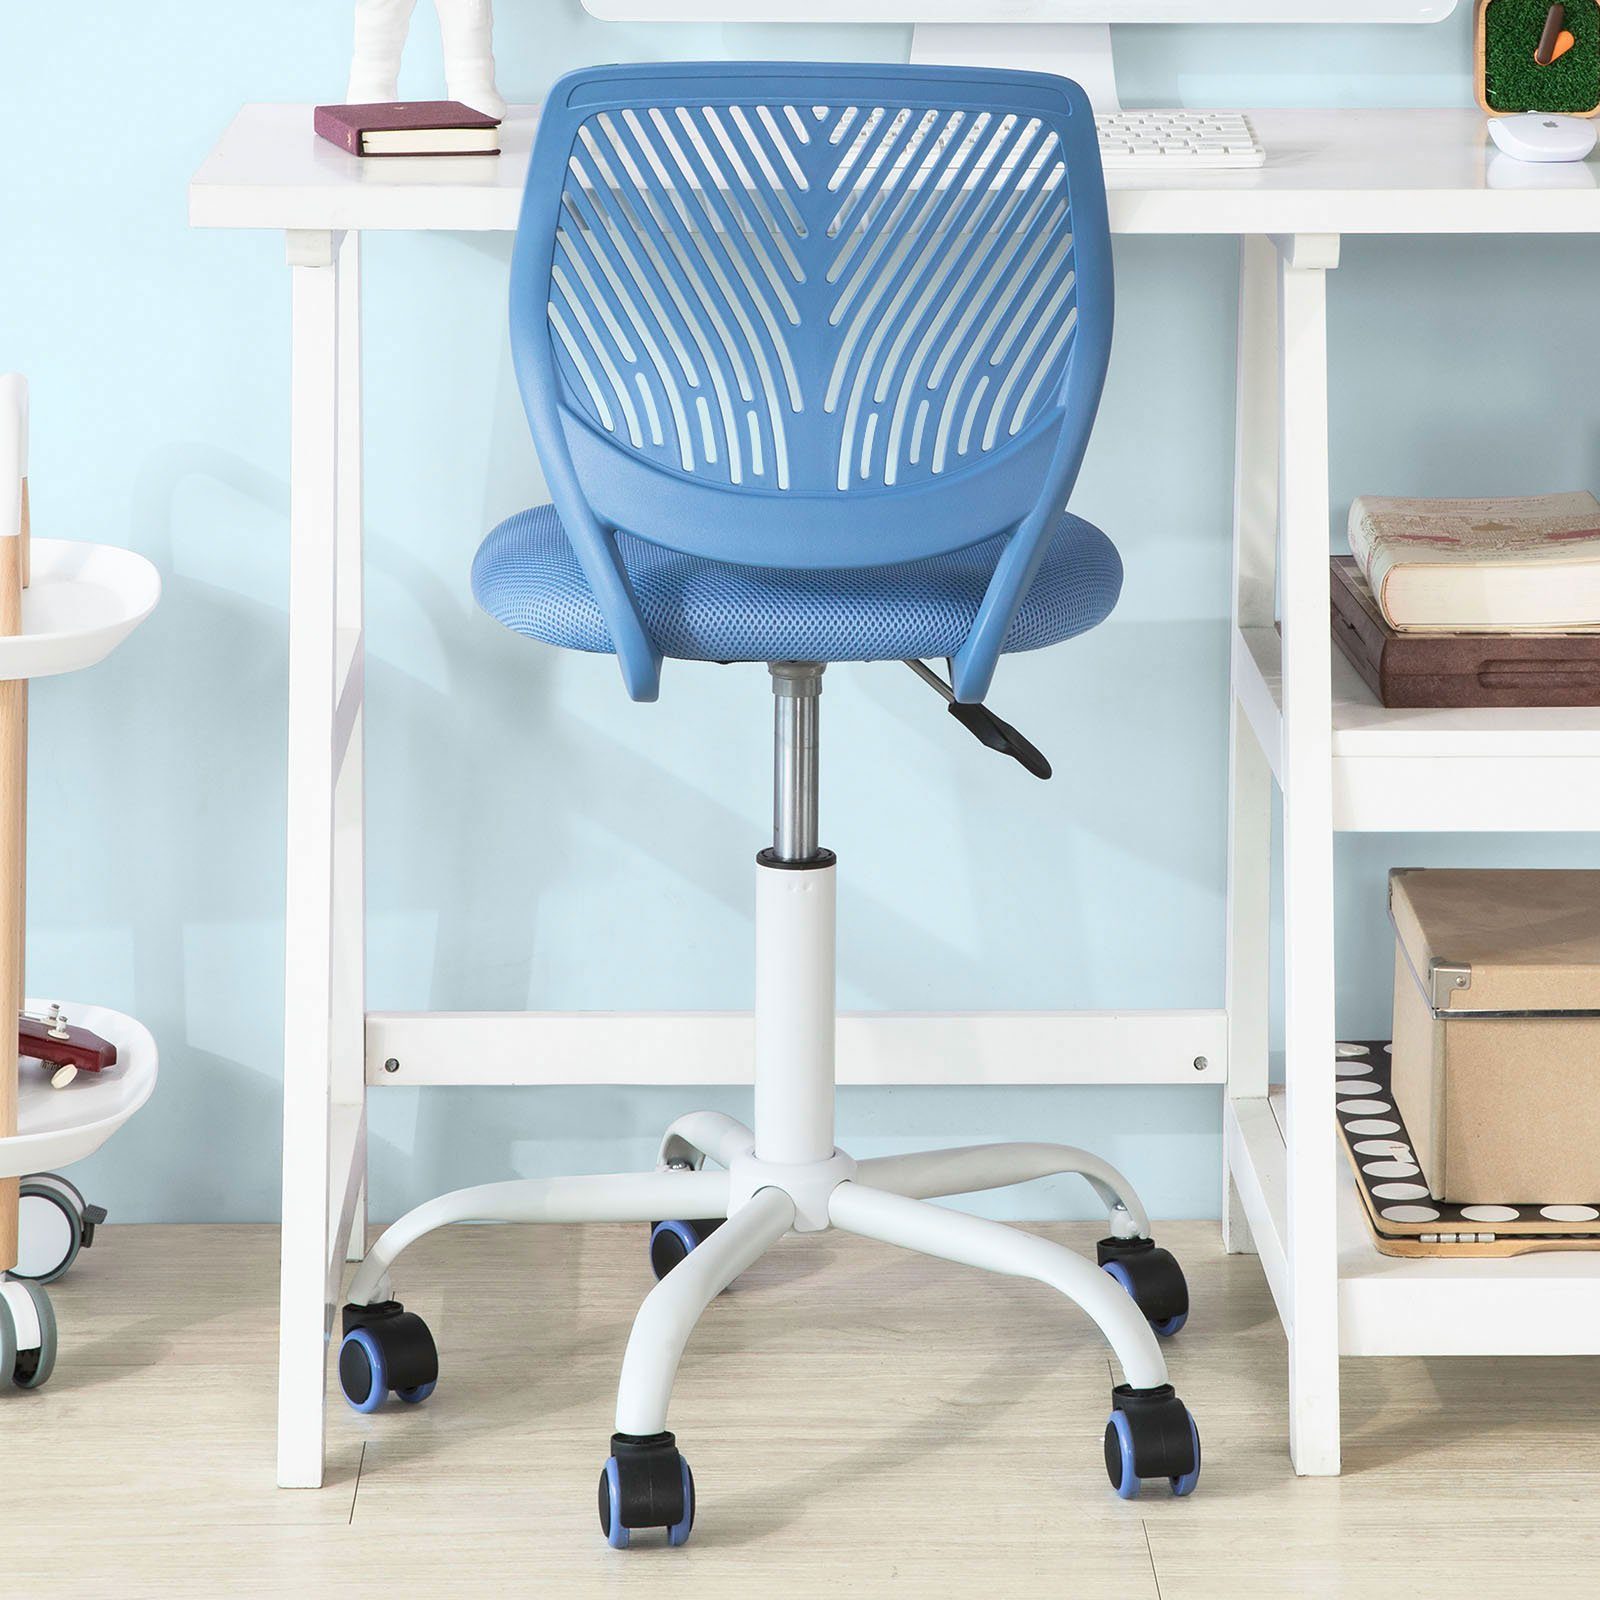 höhenverstellbar SoBuy blau Bürostuhl FST64, Jugenddrehstuhl Rücklehne Drehstuhl Schreibtischstuhl mit